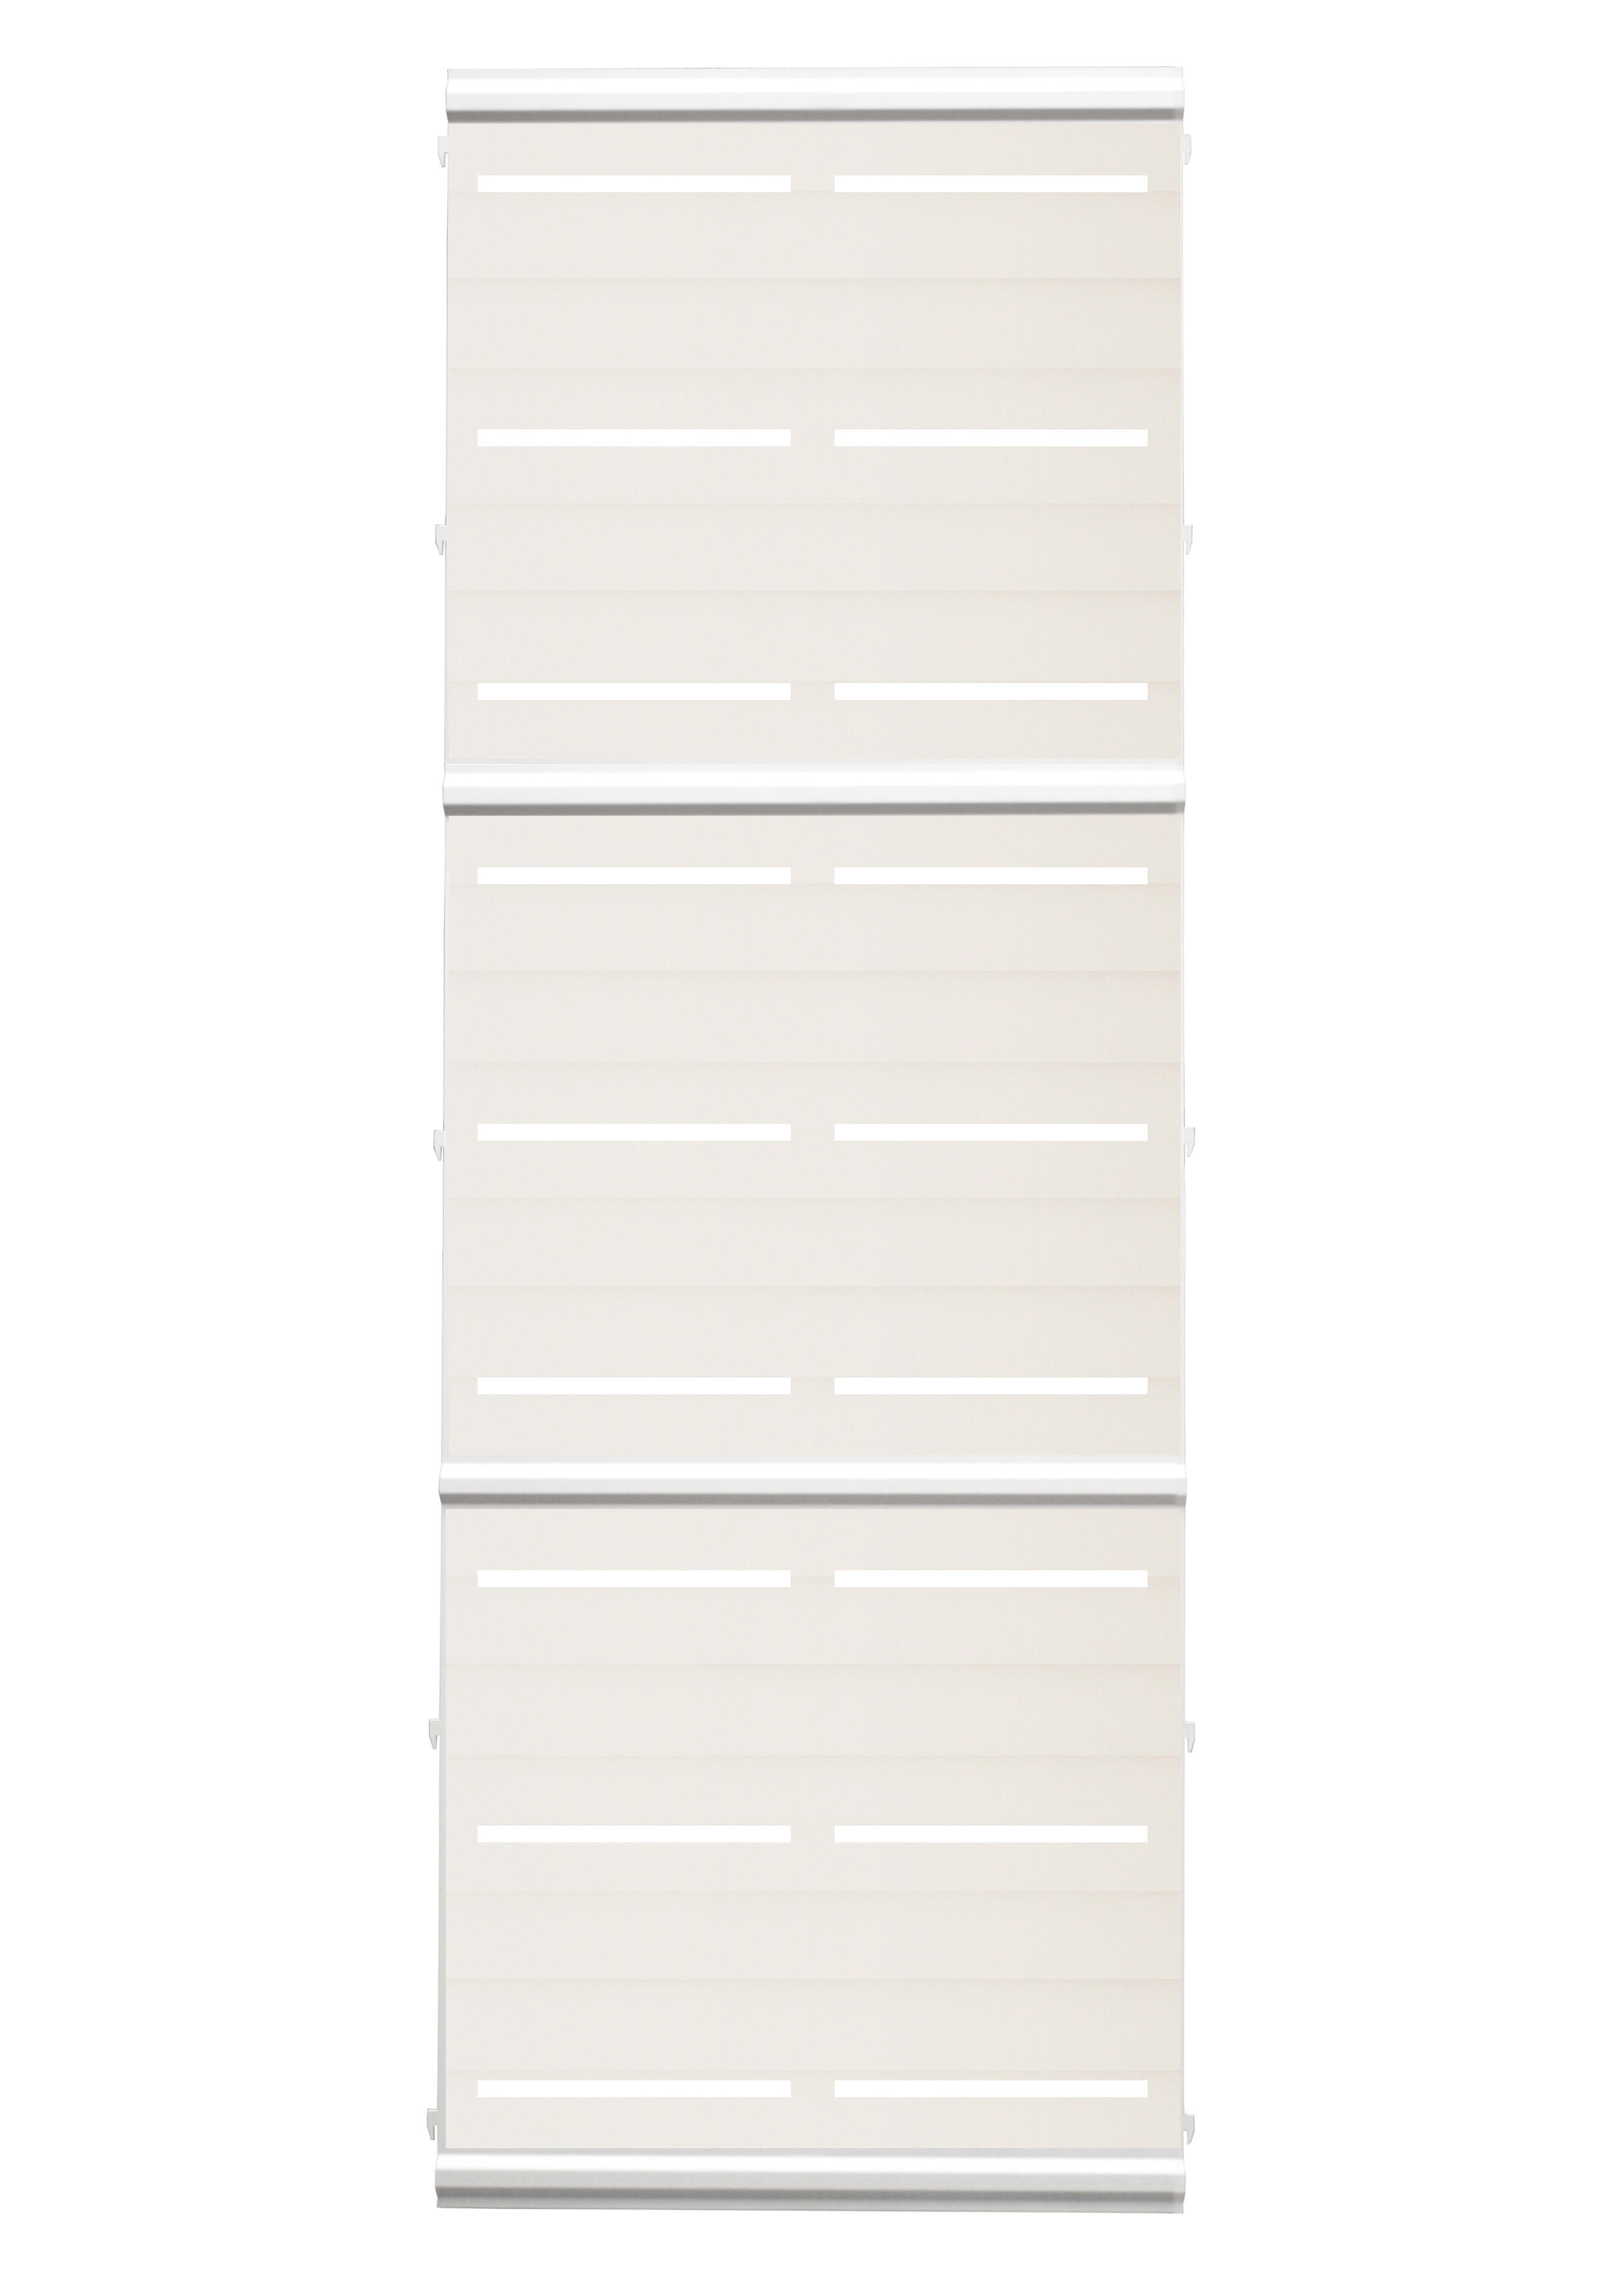 Panel remate valla acero galvanizado franja rayas blanco 194x73,5 cm